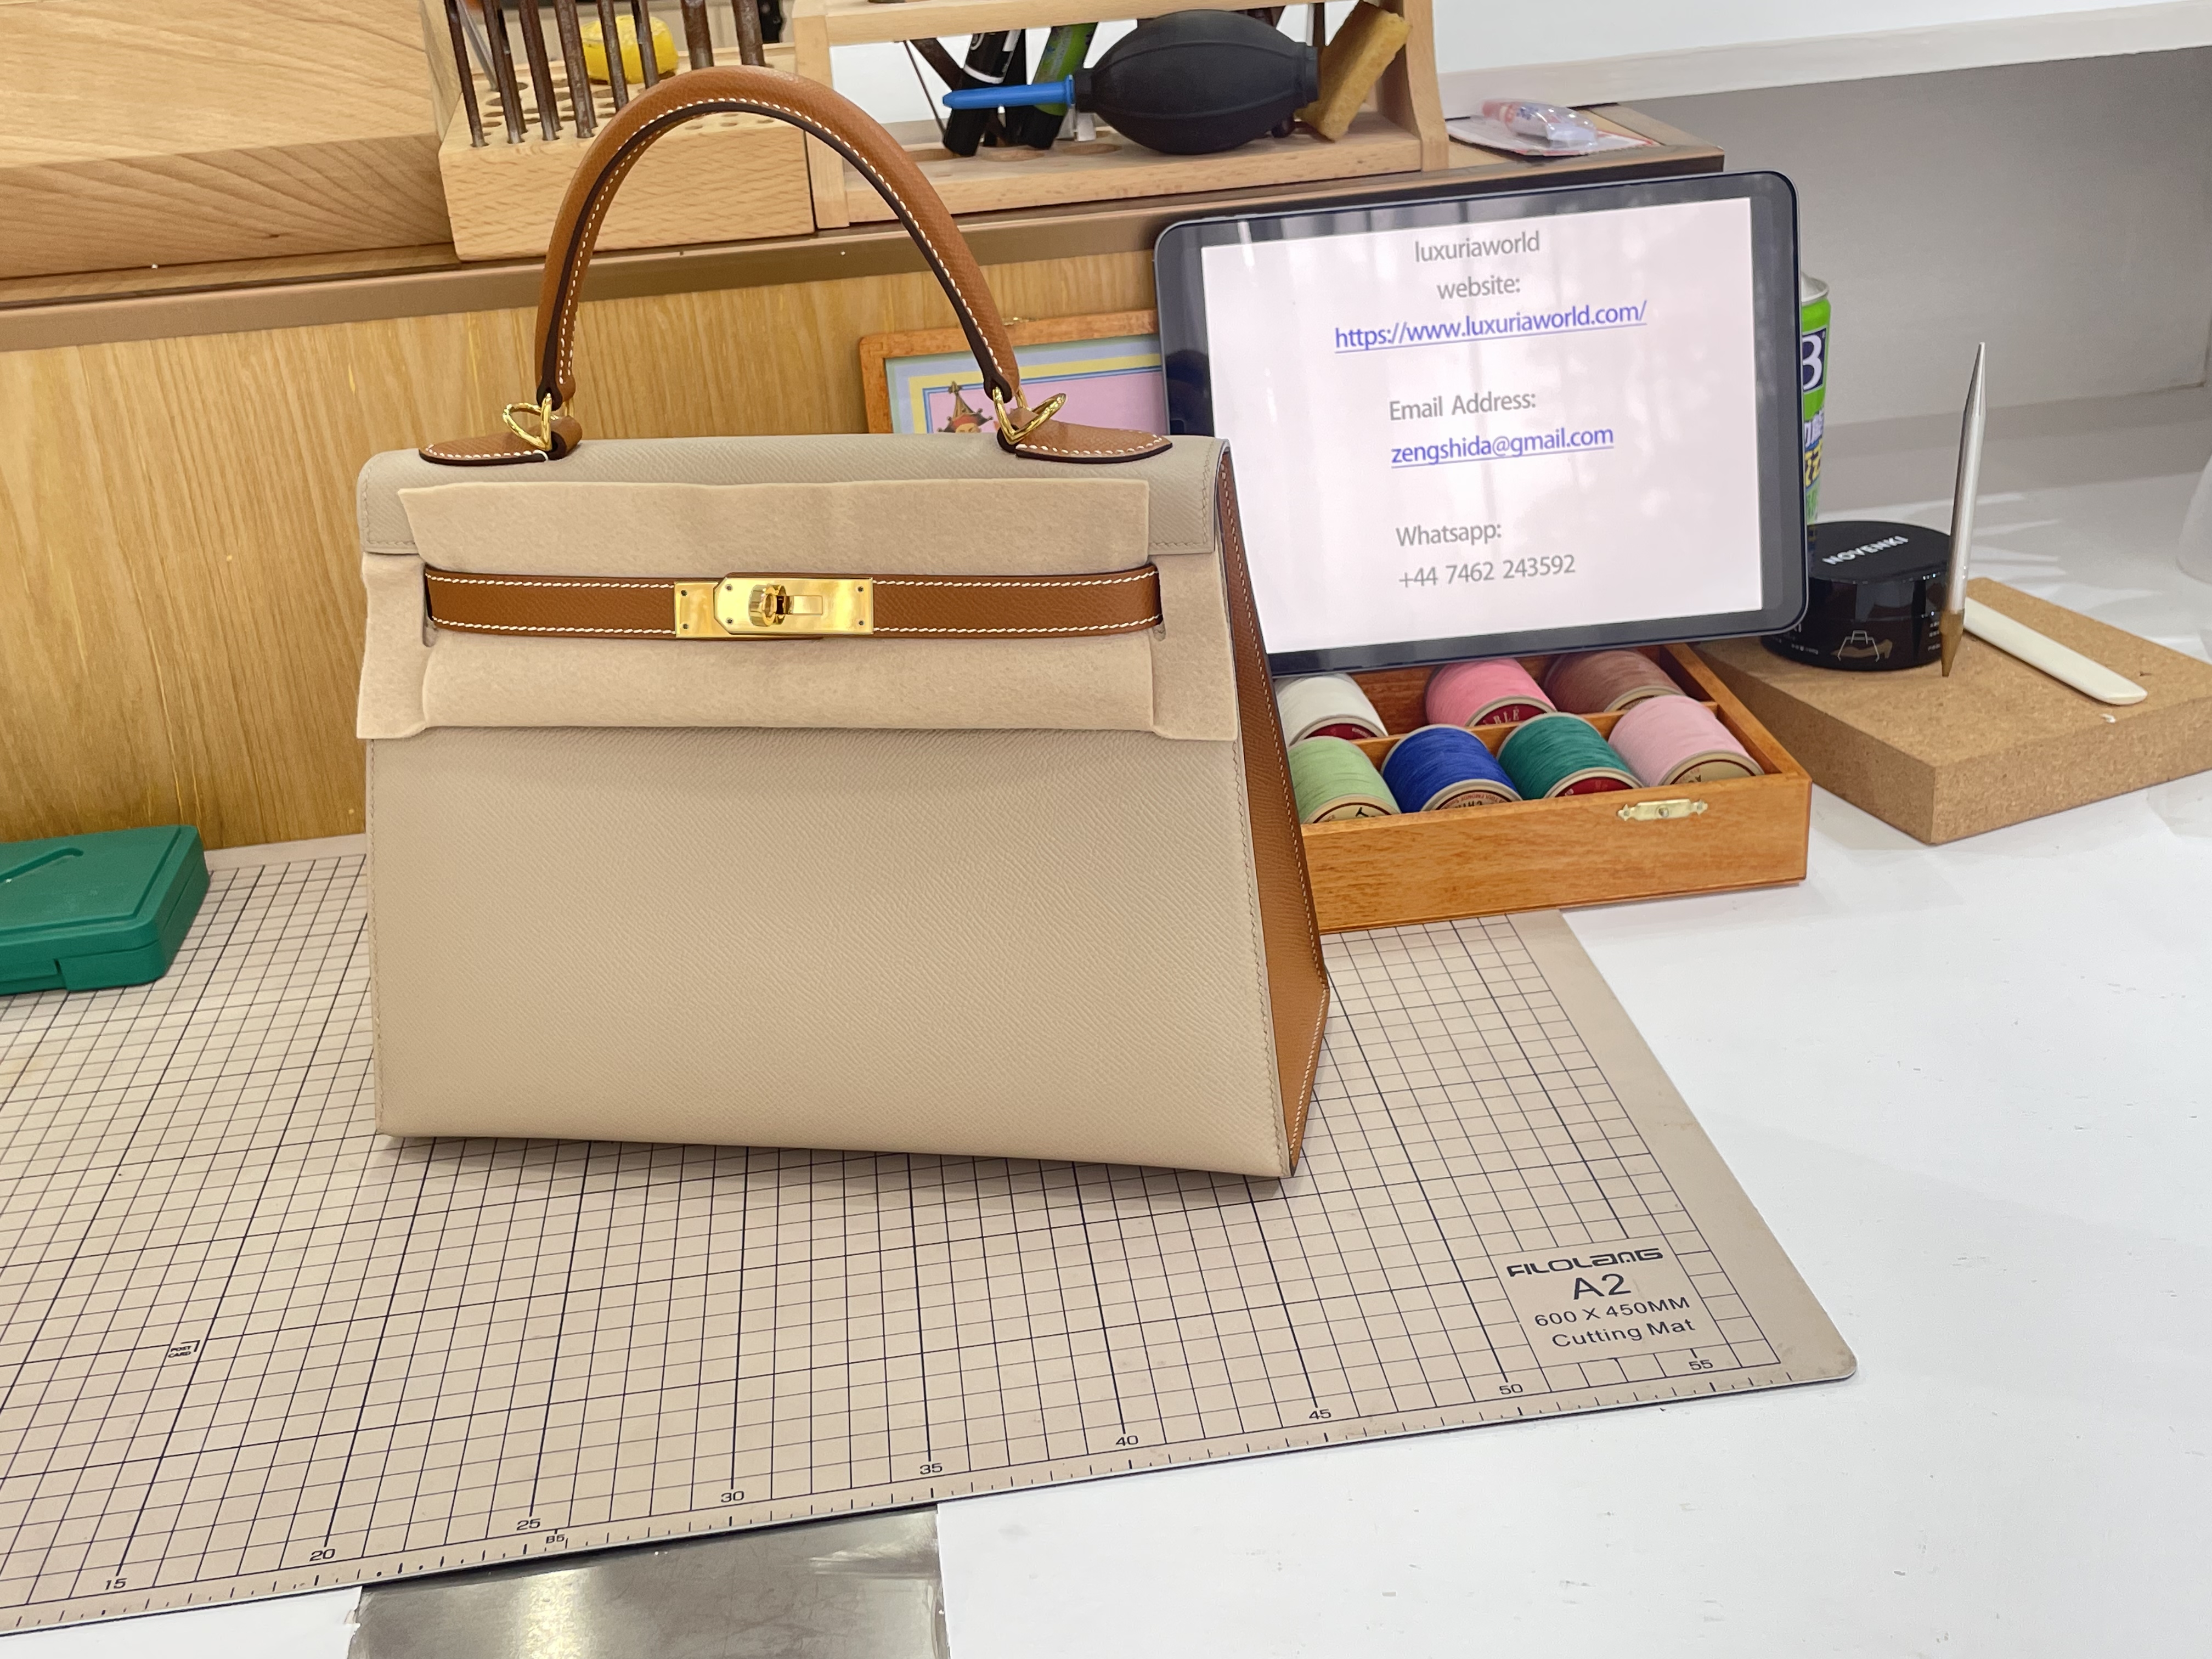 Best Louis Vuitton Replica Handbags by bestreplicahandbags on